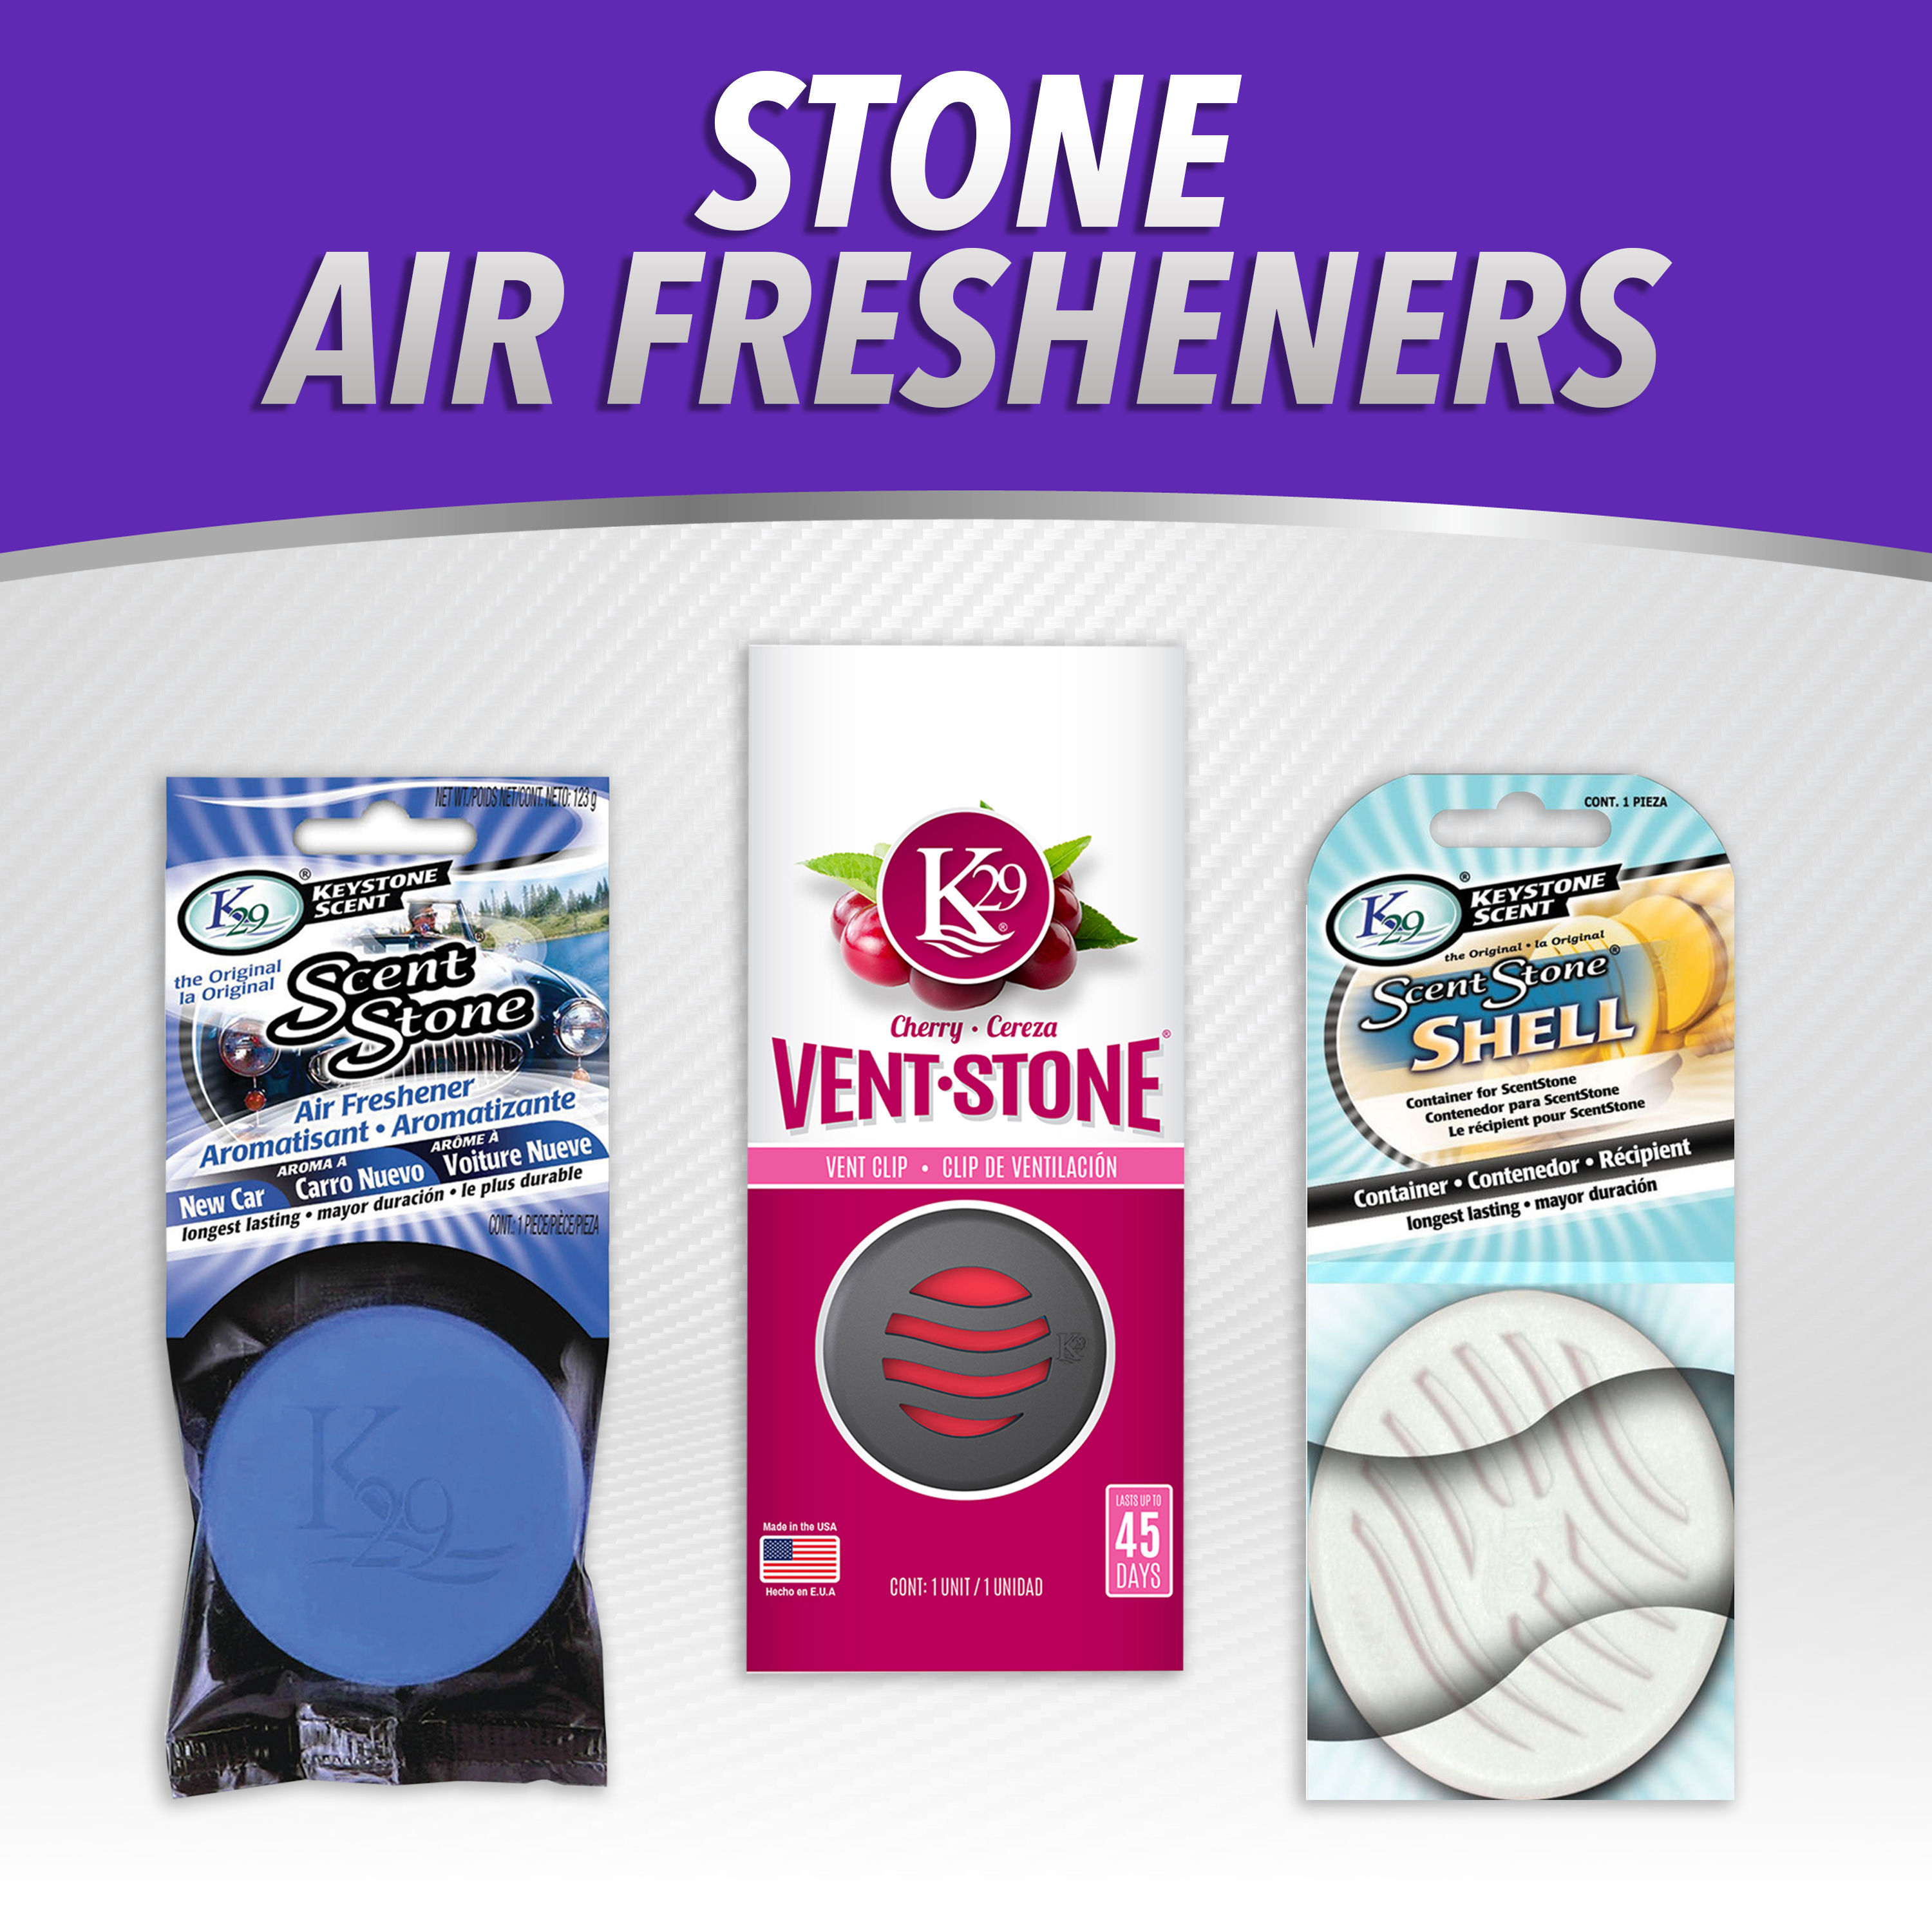 K29 Scent Stone Air Freshener